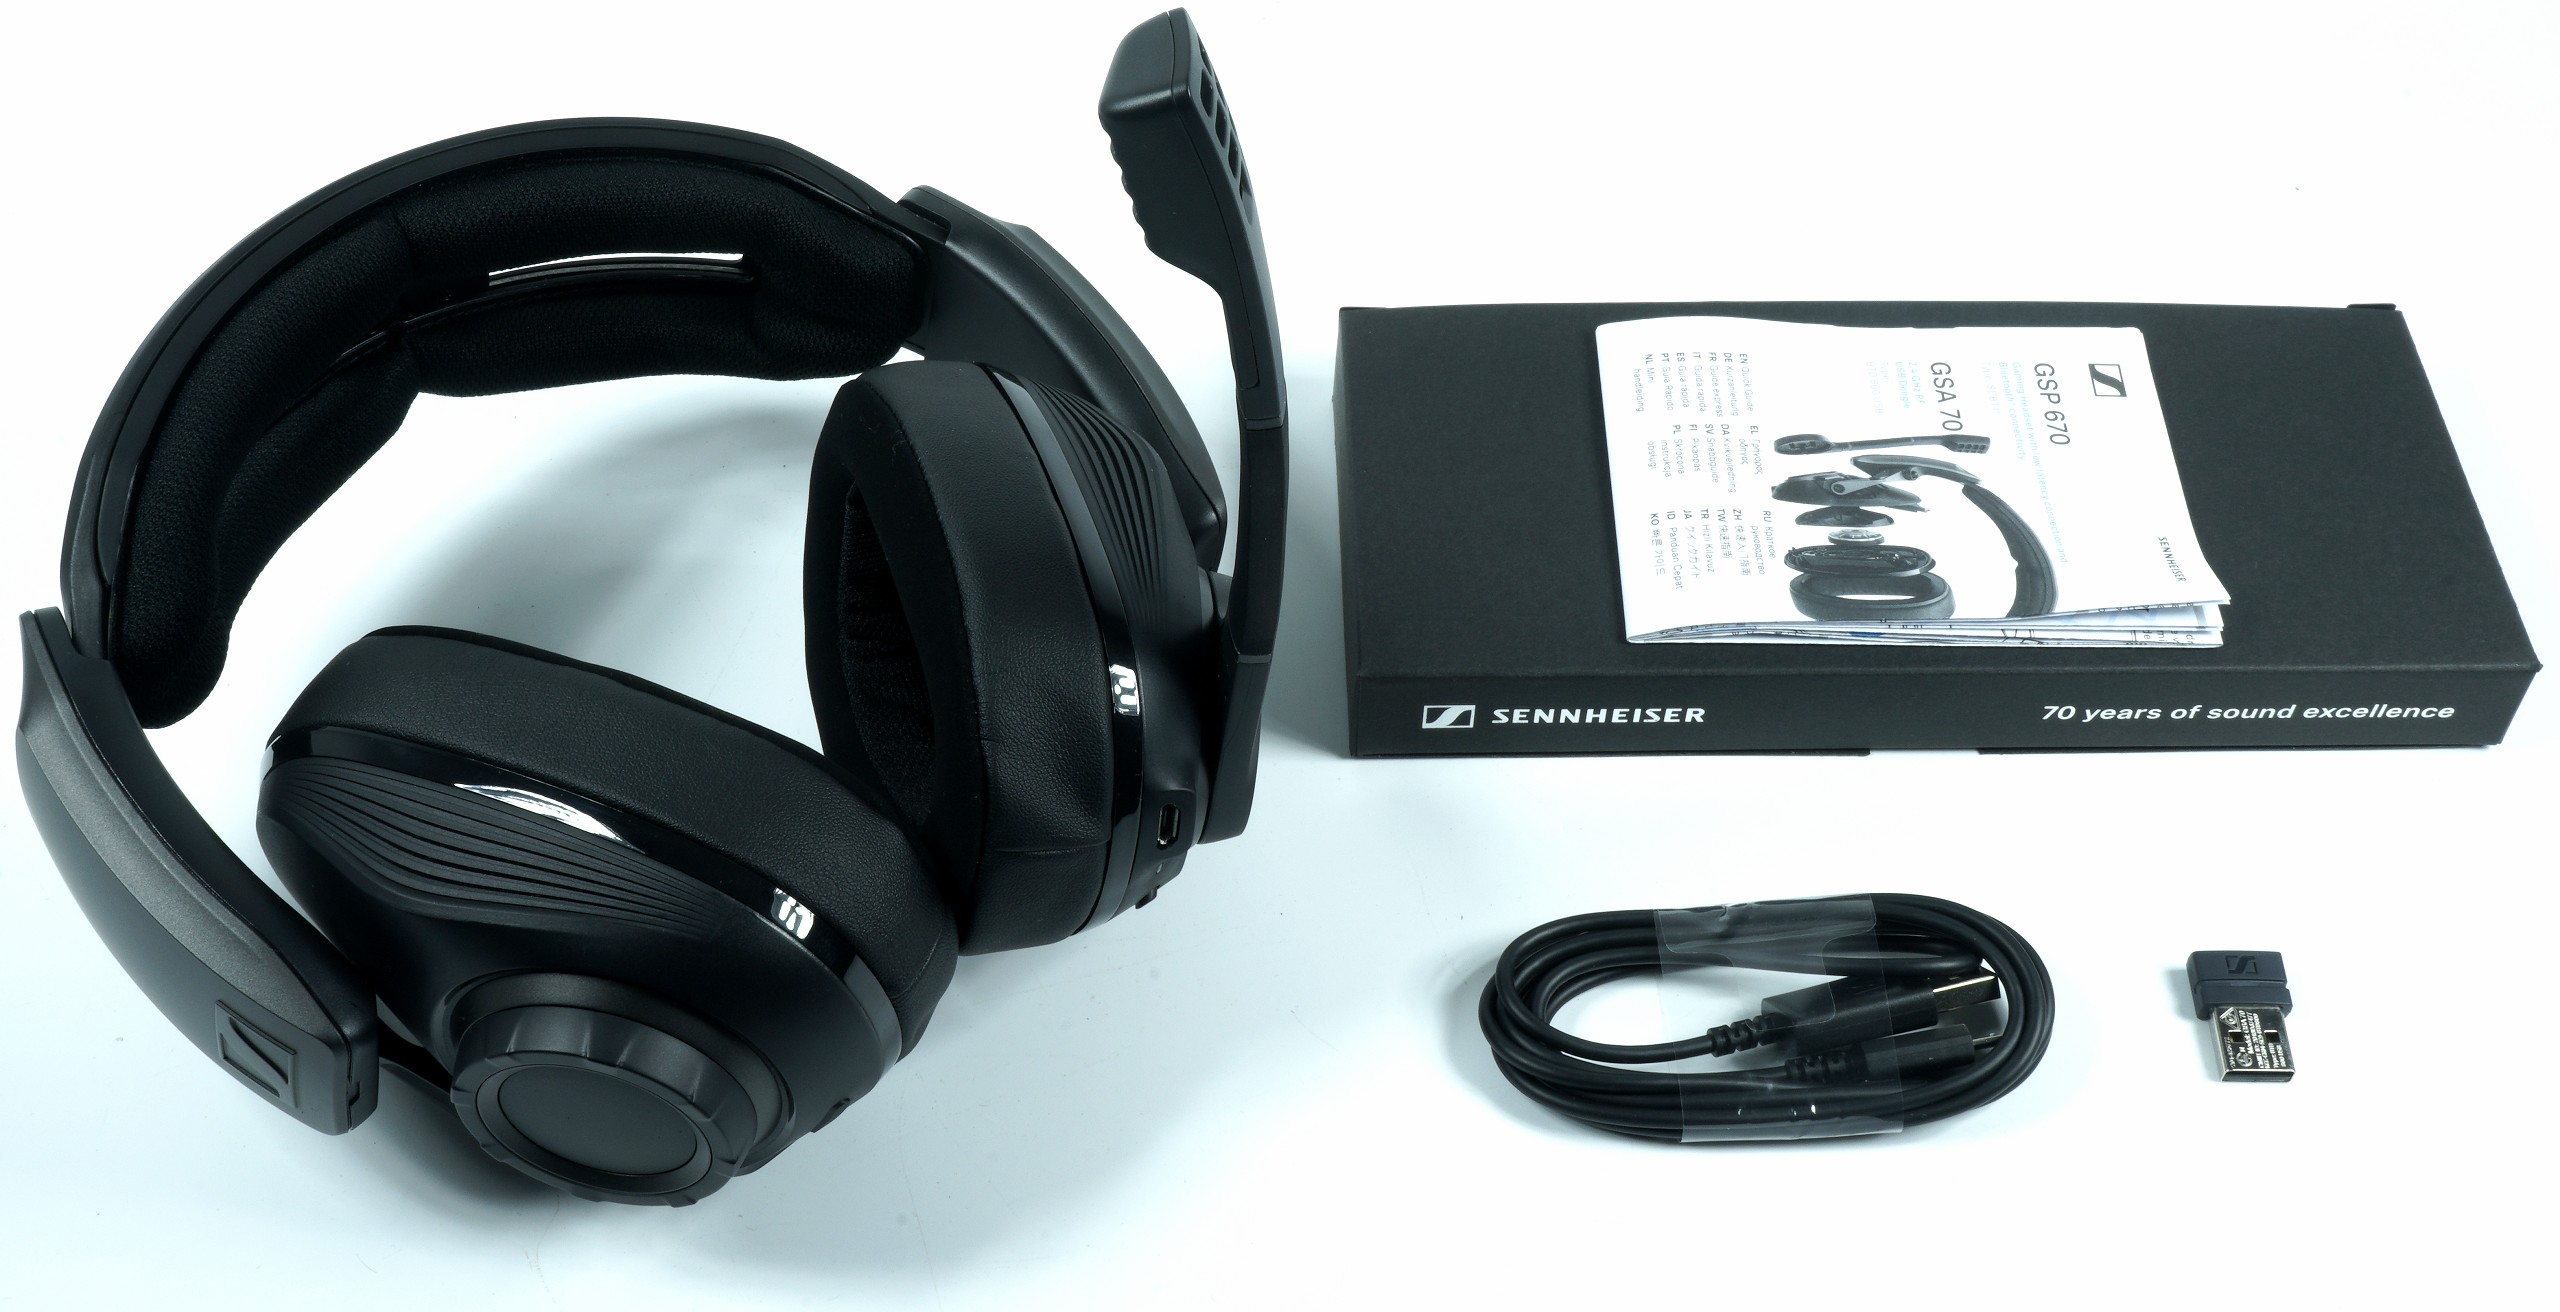 Sennheiser GSP 670 Wireless Gaming Headset review - how good is 